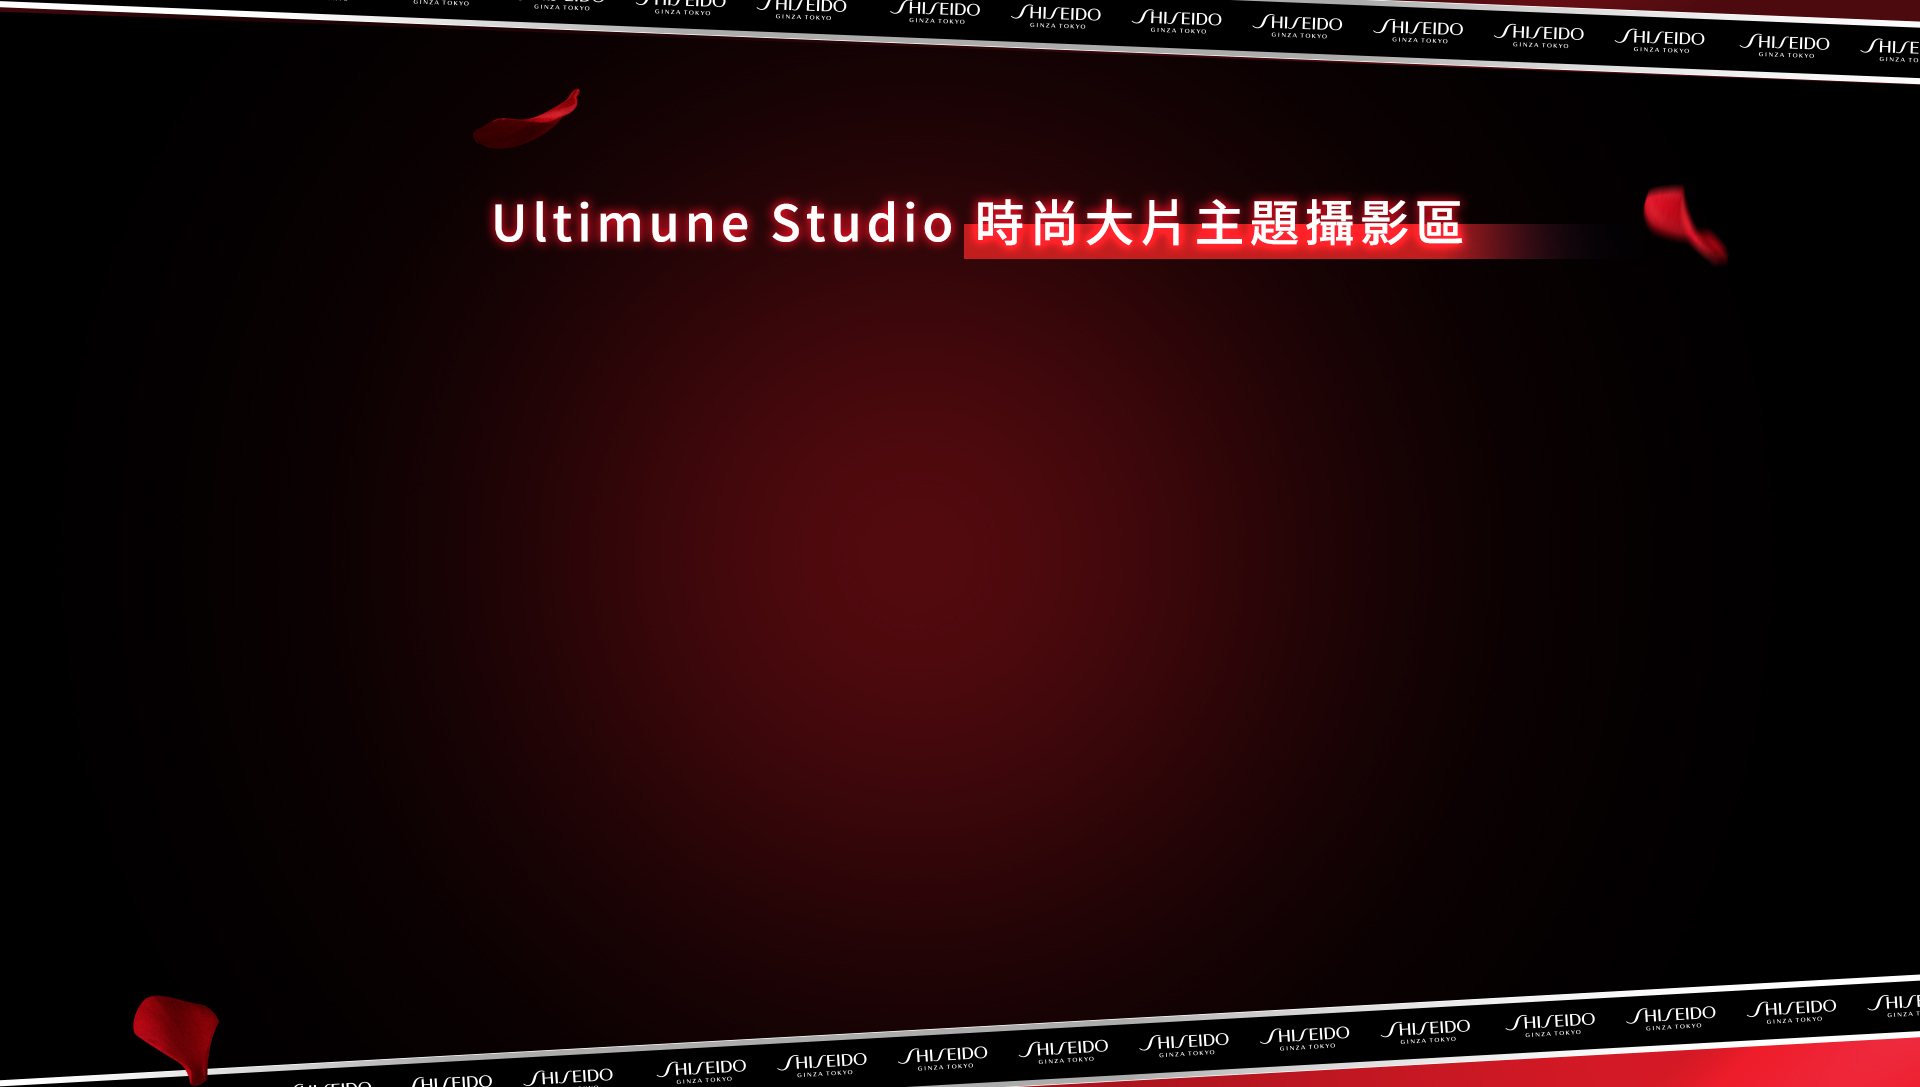 Ultimune Studio 時尚大片主題攝影區